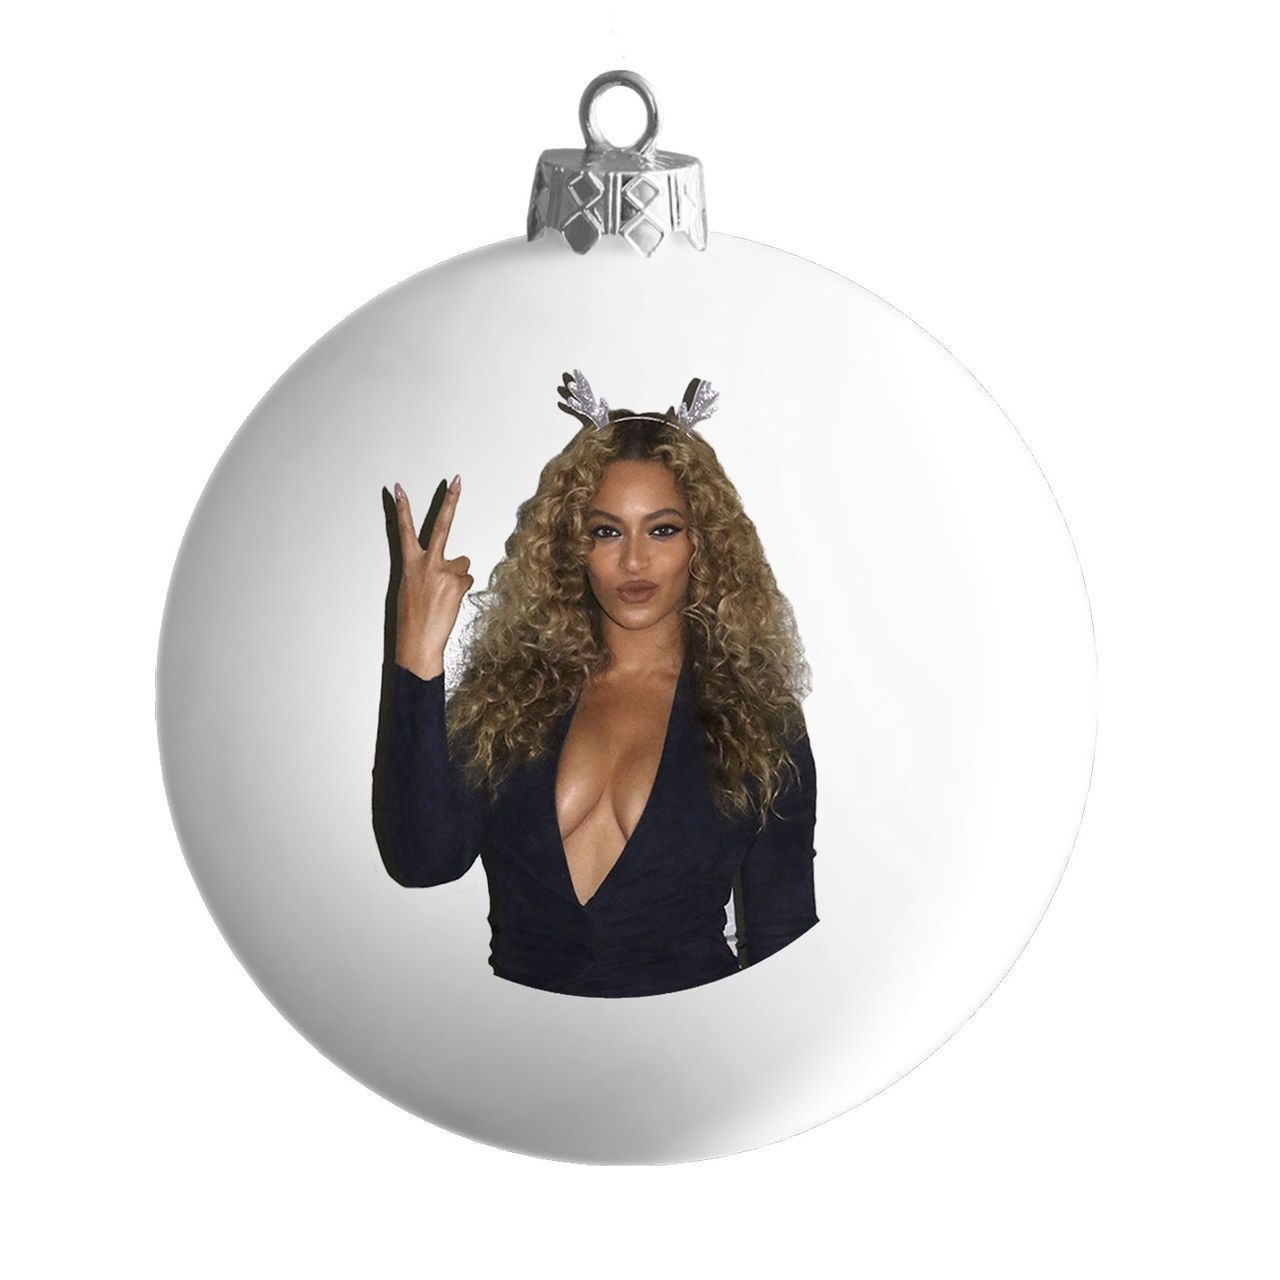 Holidayoncé White Satin Ball Ornament, $12, [Beyonce.com](https://shop.beyonce.com/products/62214-holidayonce-white-satin-ball-ornament)